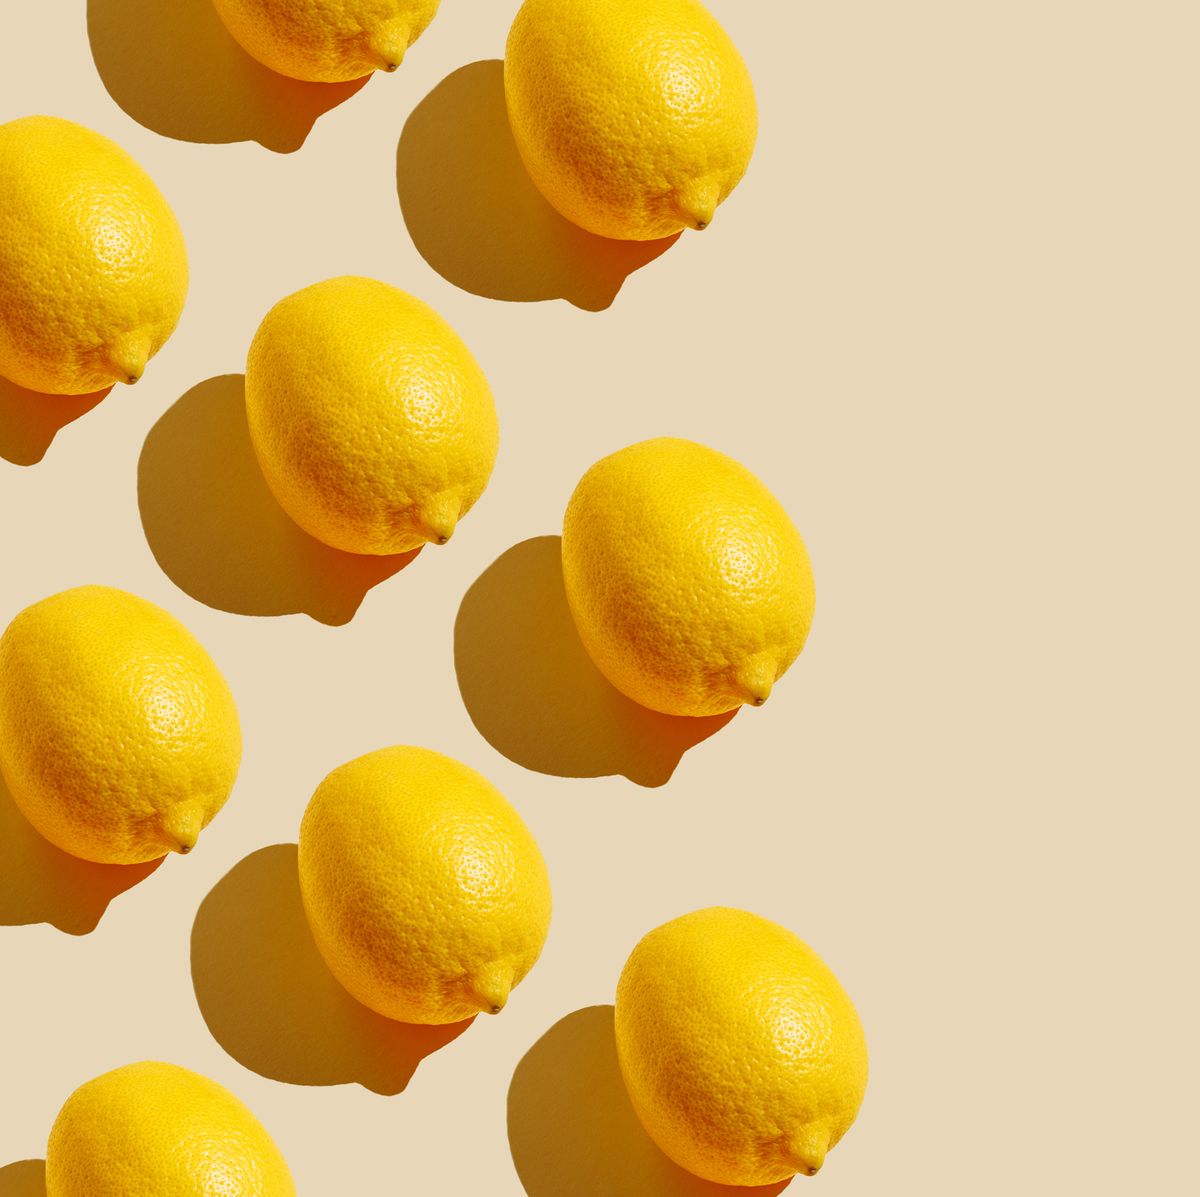 Uses for Lemons: Cleaning, Freshening, and More Tips